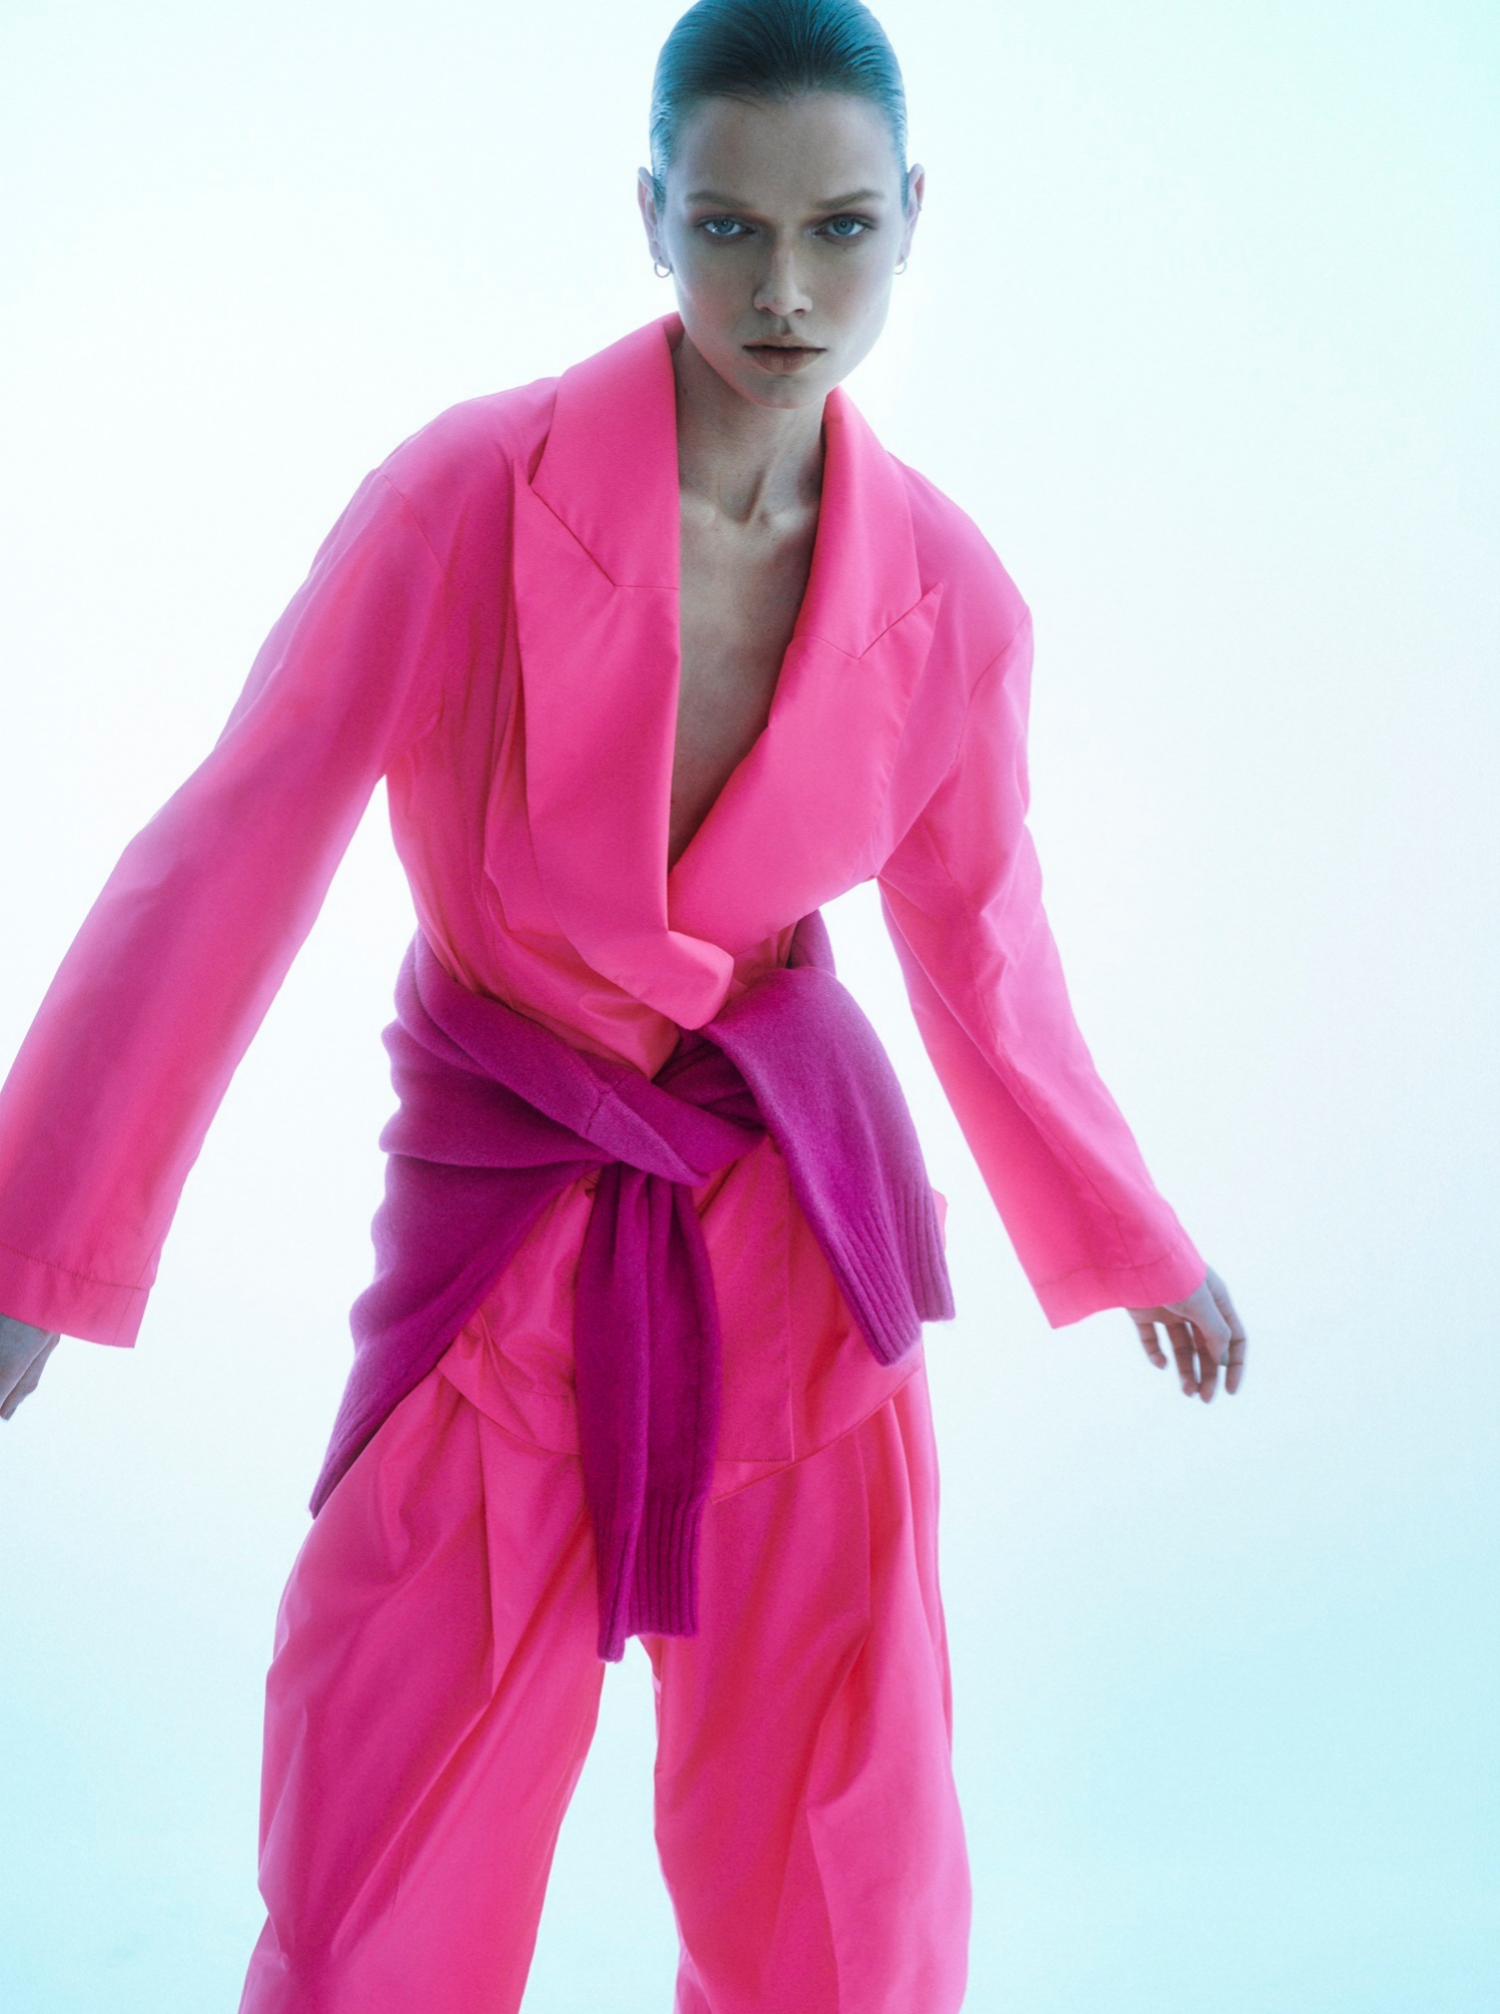 Modelo con traje dos piezas en tono rosa neón